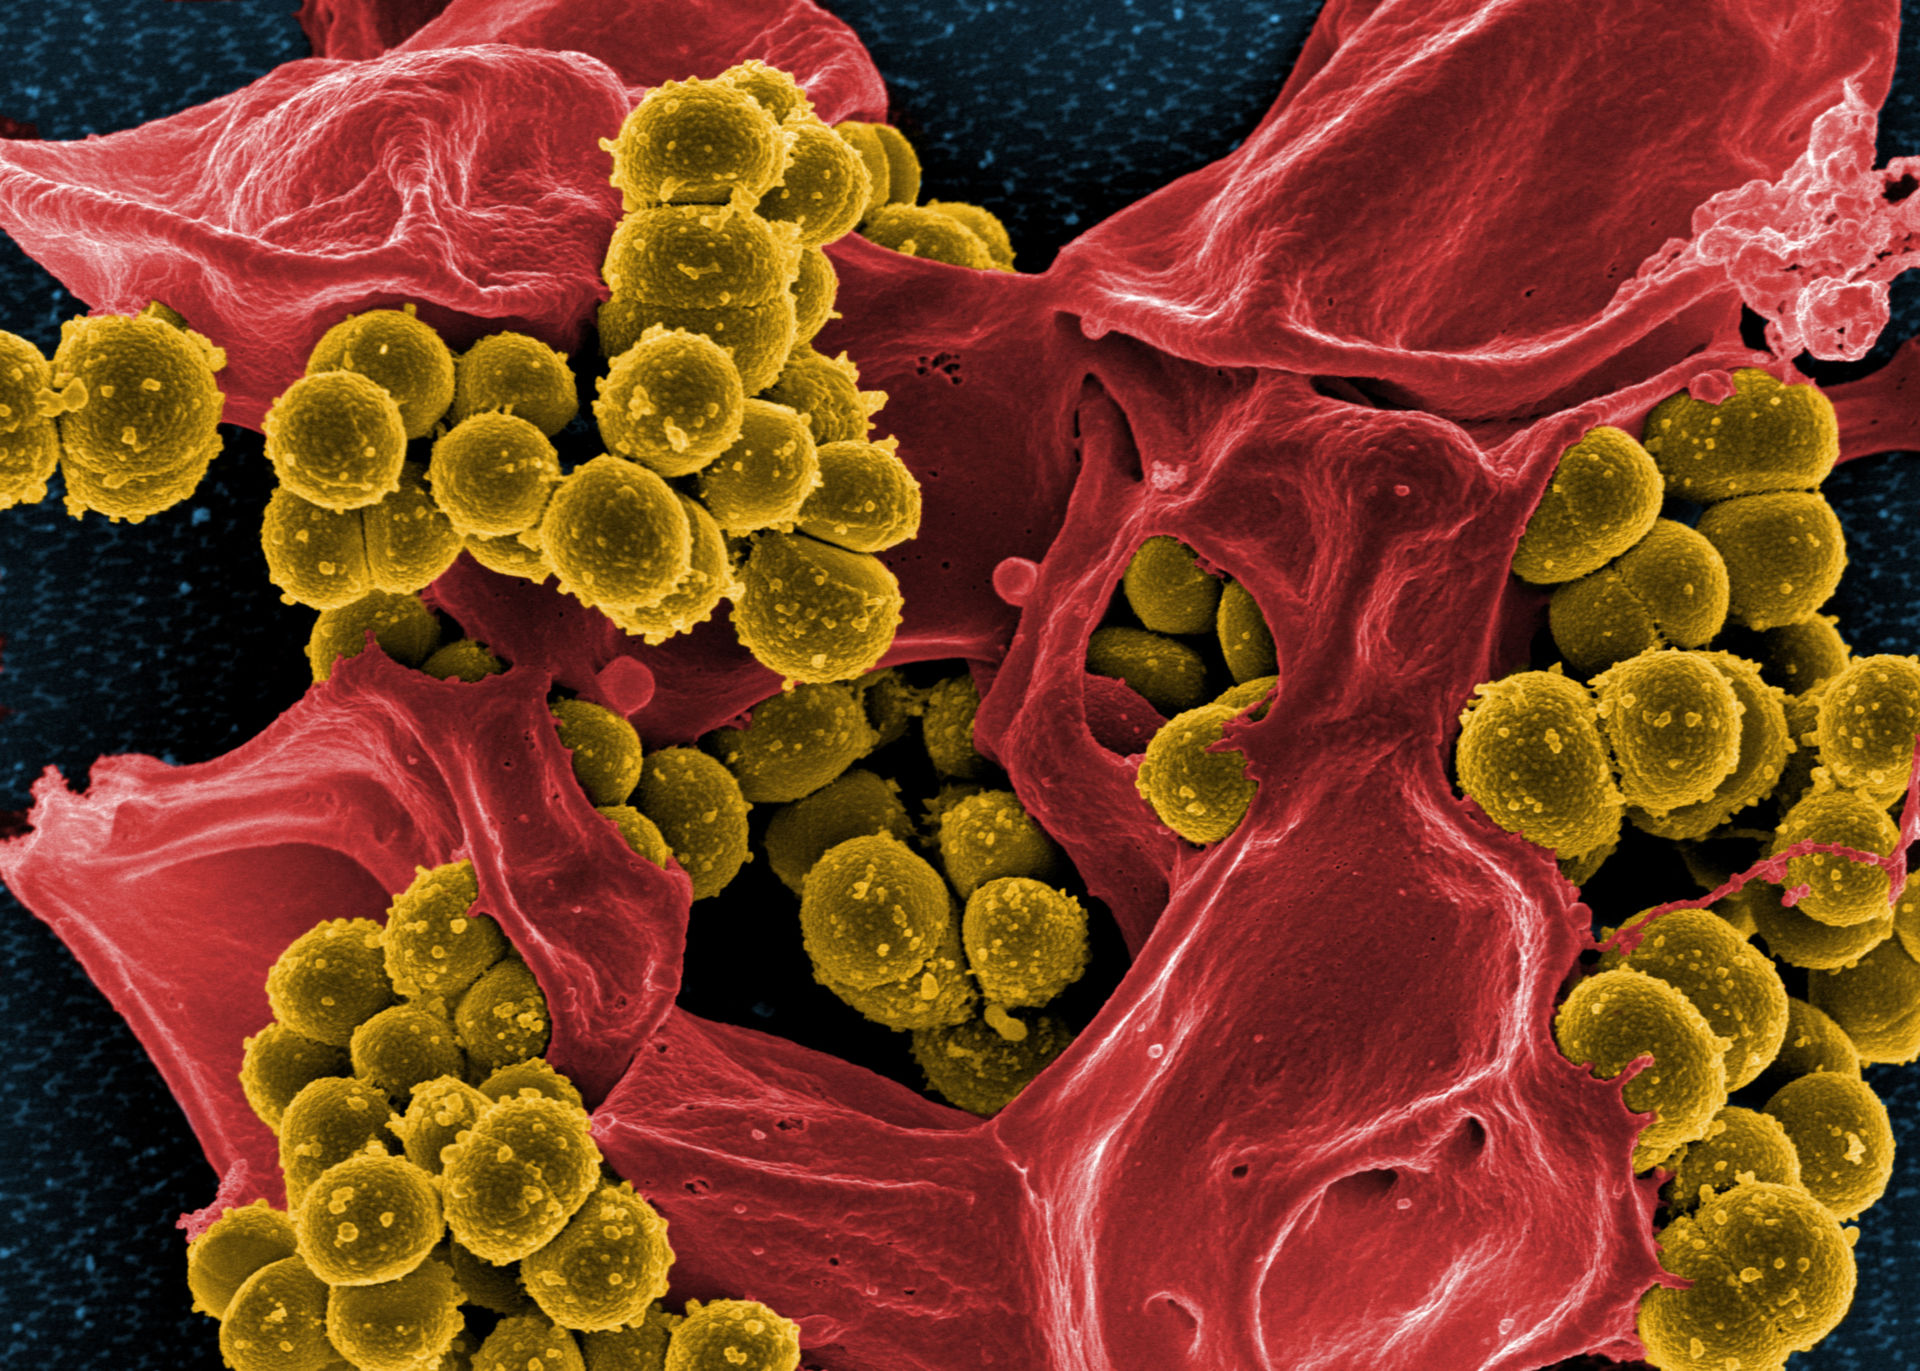 Micrografia di Staphylococcus aureus meticillino-resistente (MRSA)